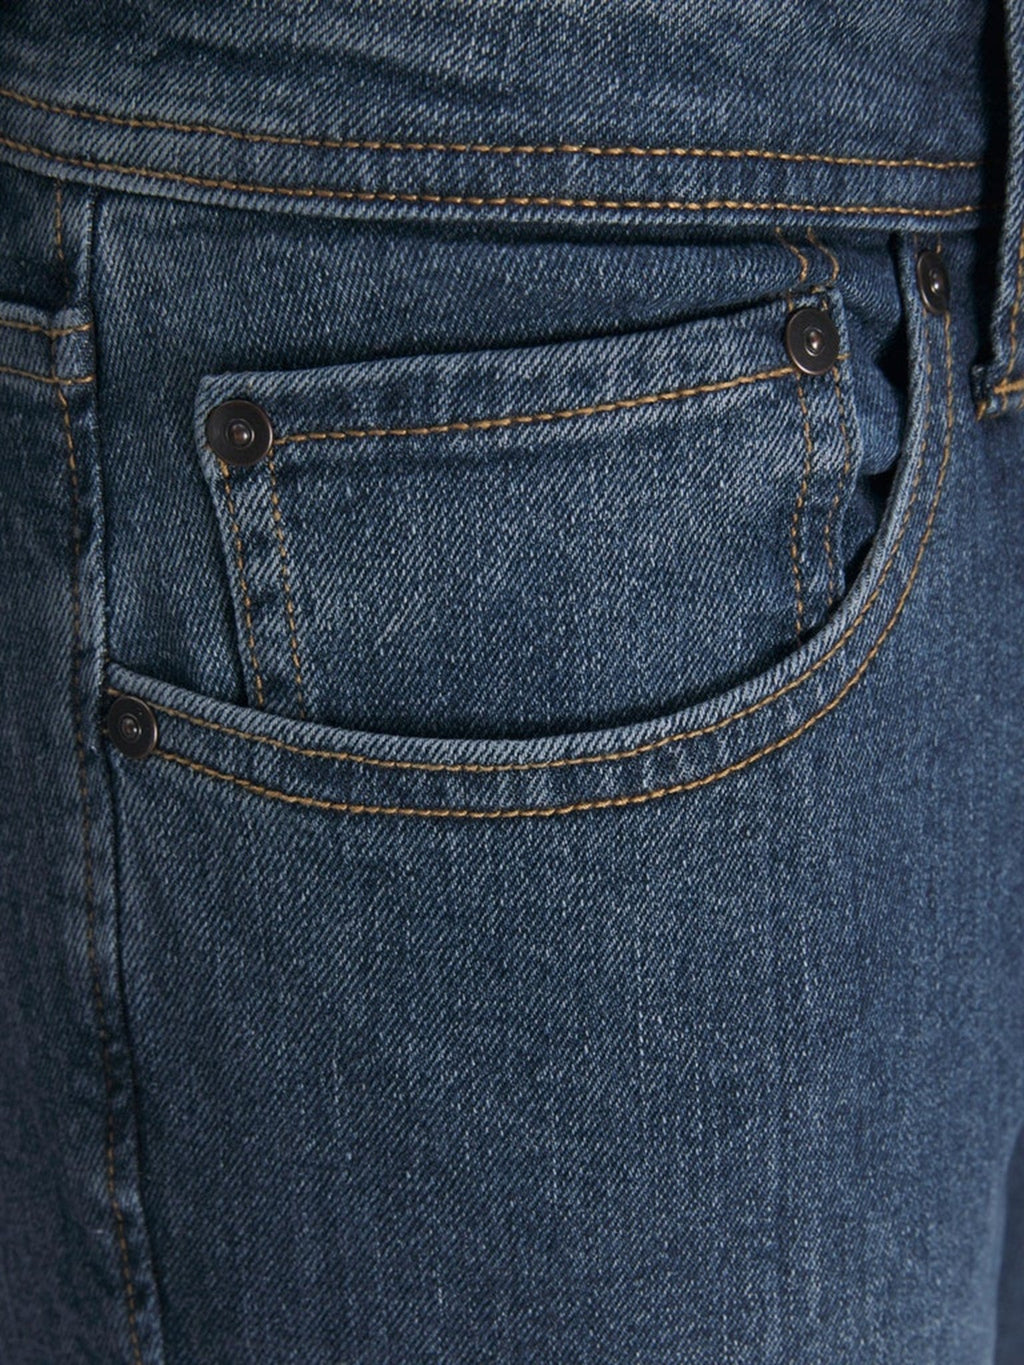 Le jean de performance original (Slim) - Denim bleu moyen